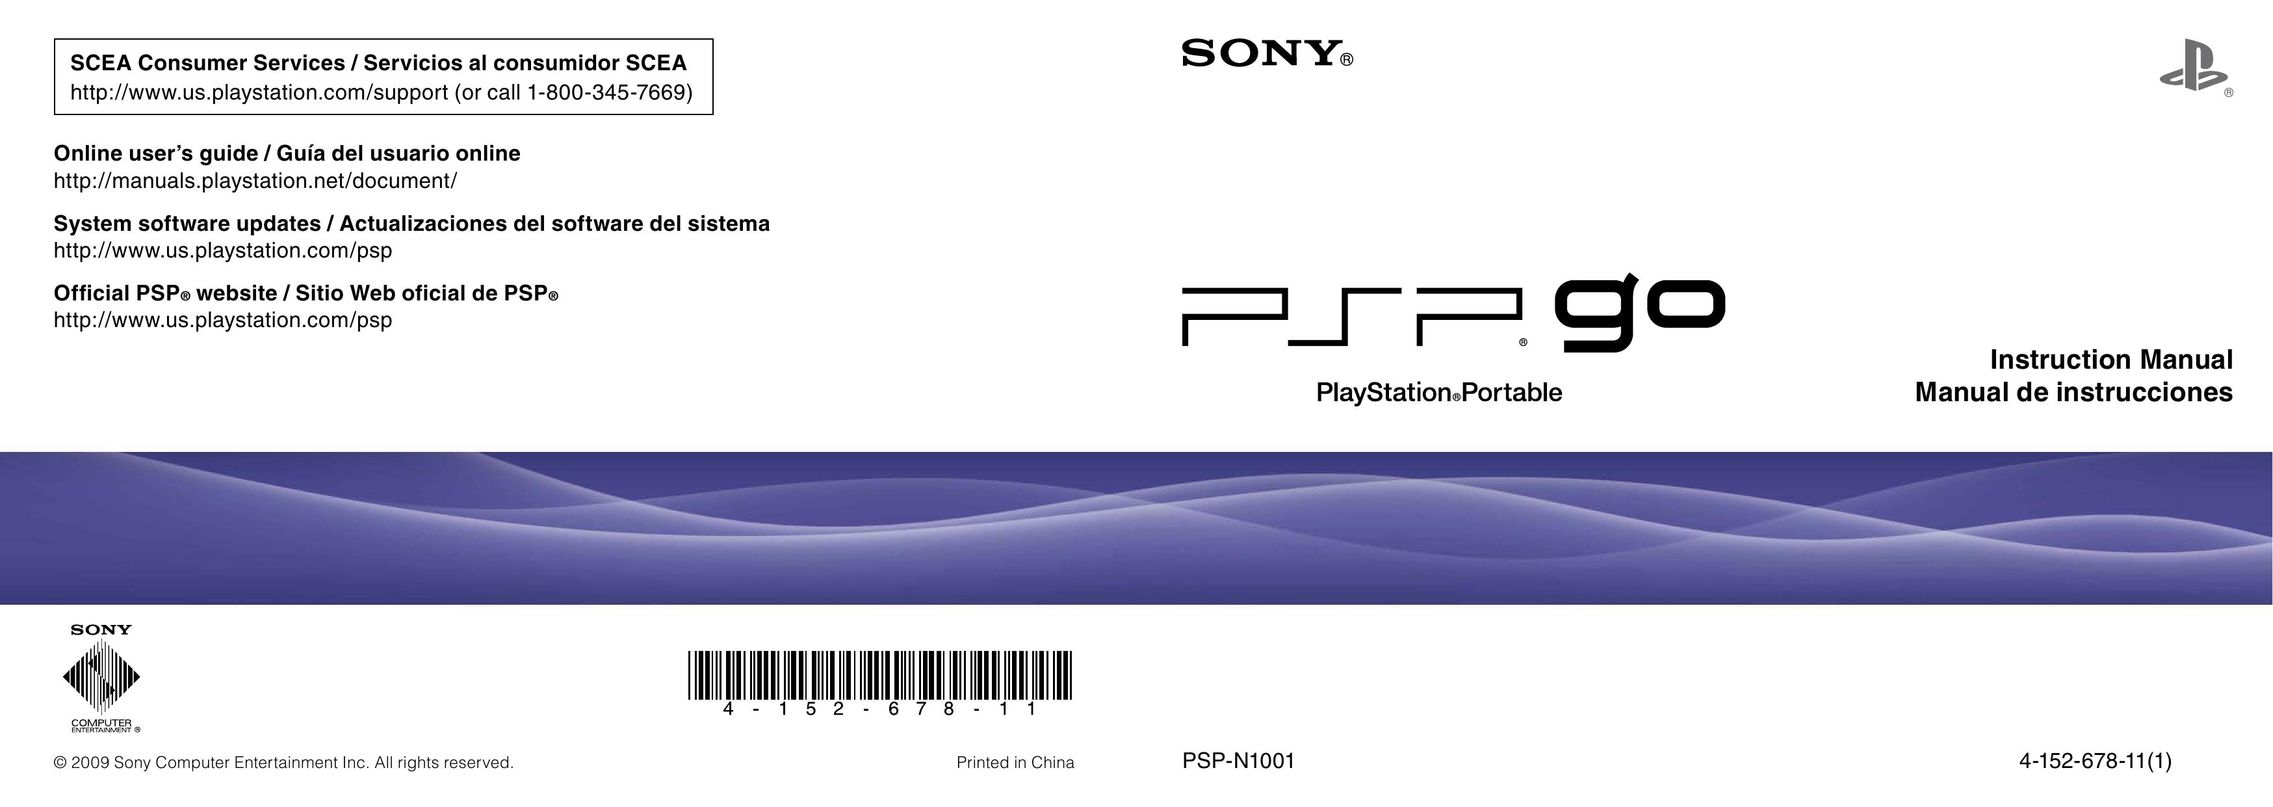 Sony PSP-N1001 Handheld Game System User Manual